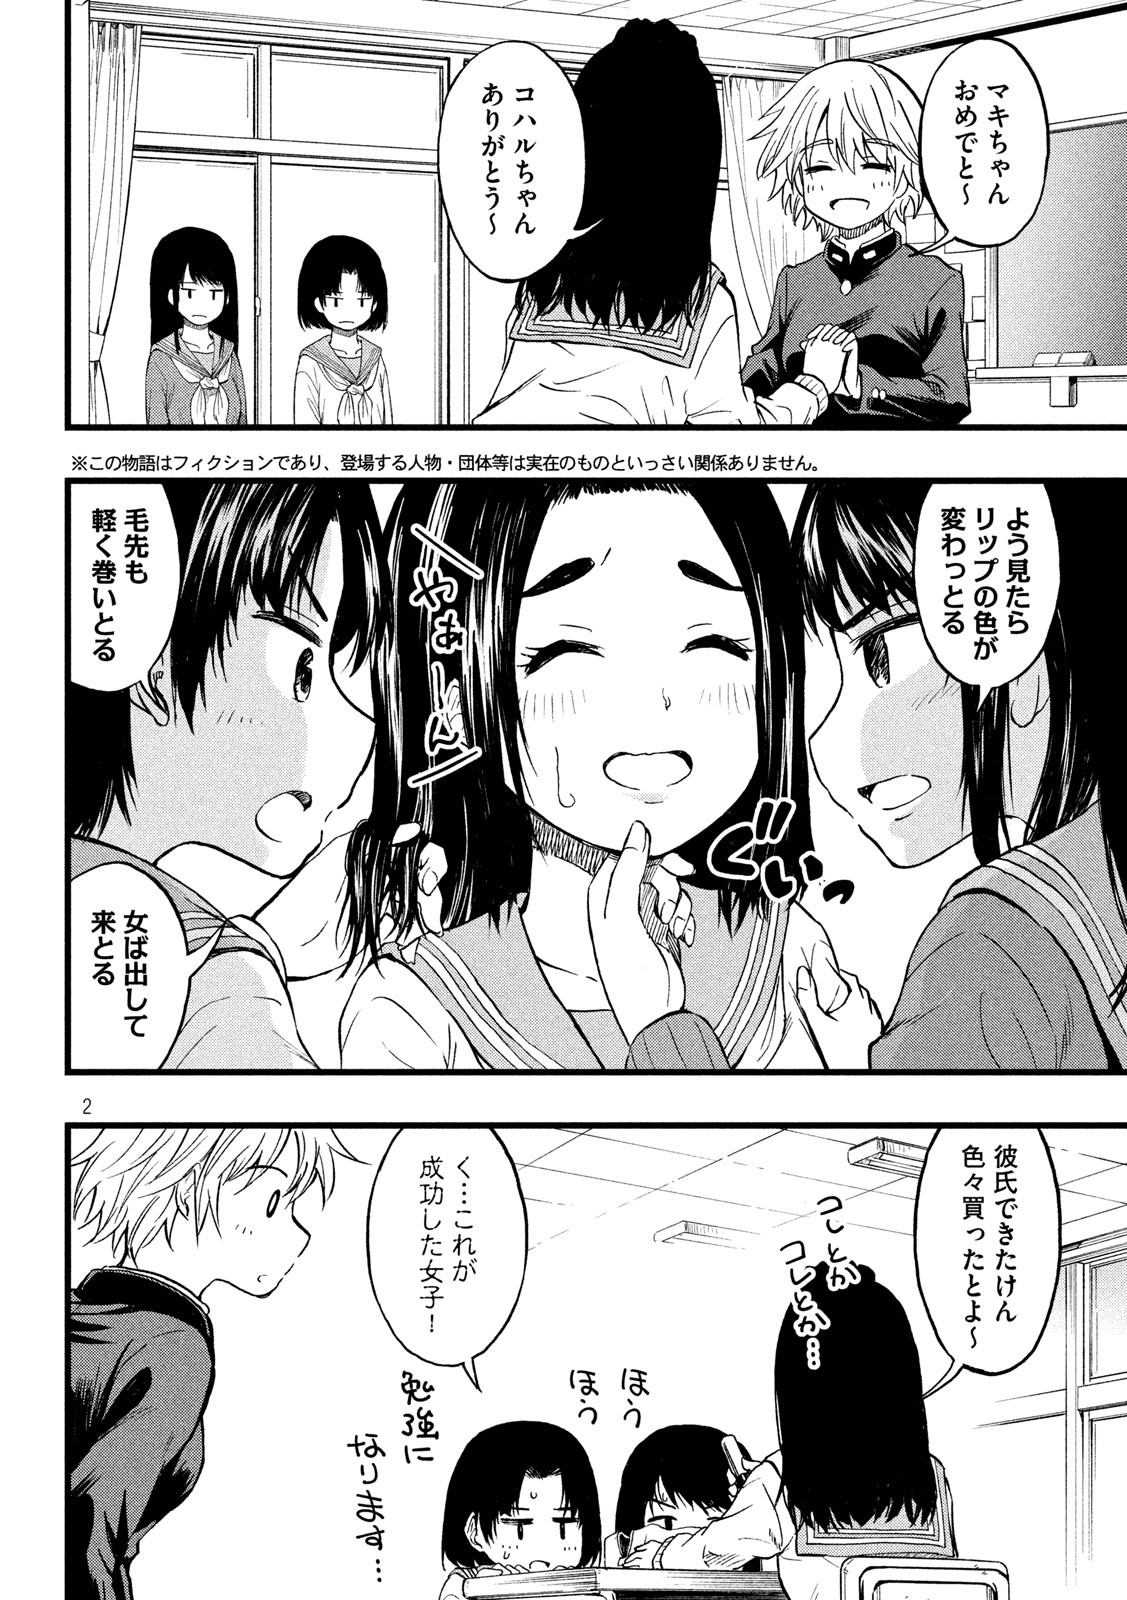 Koharu haru! - Chapter 46 - Page 2